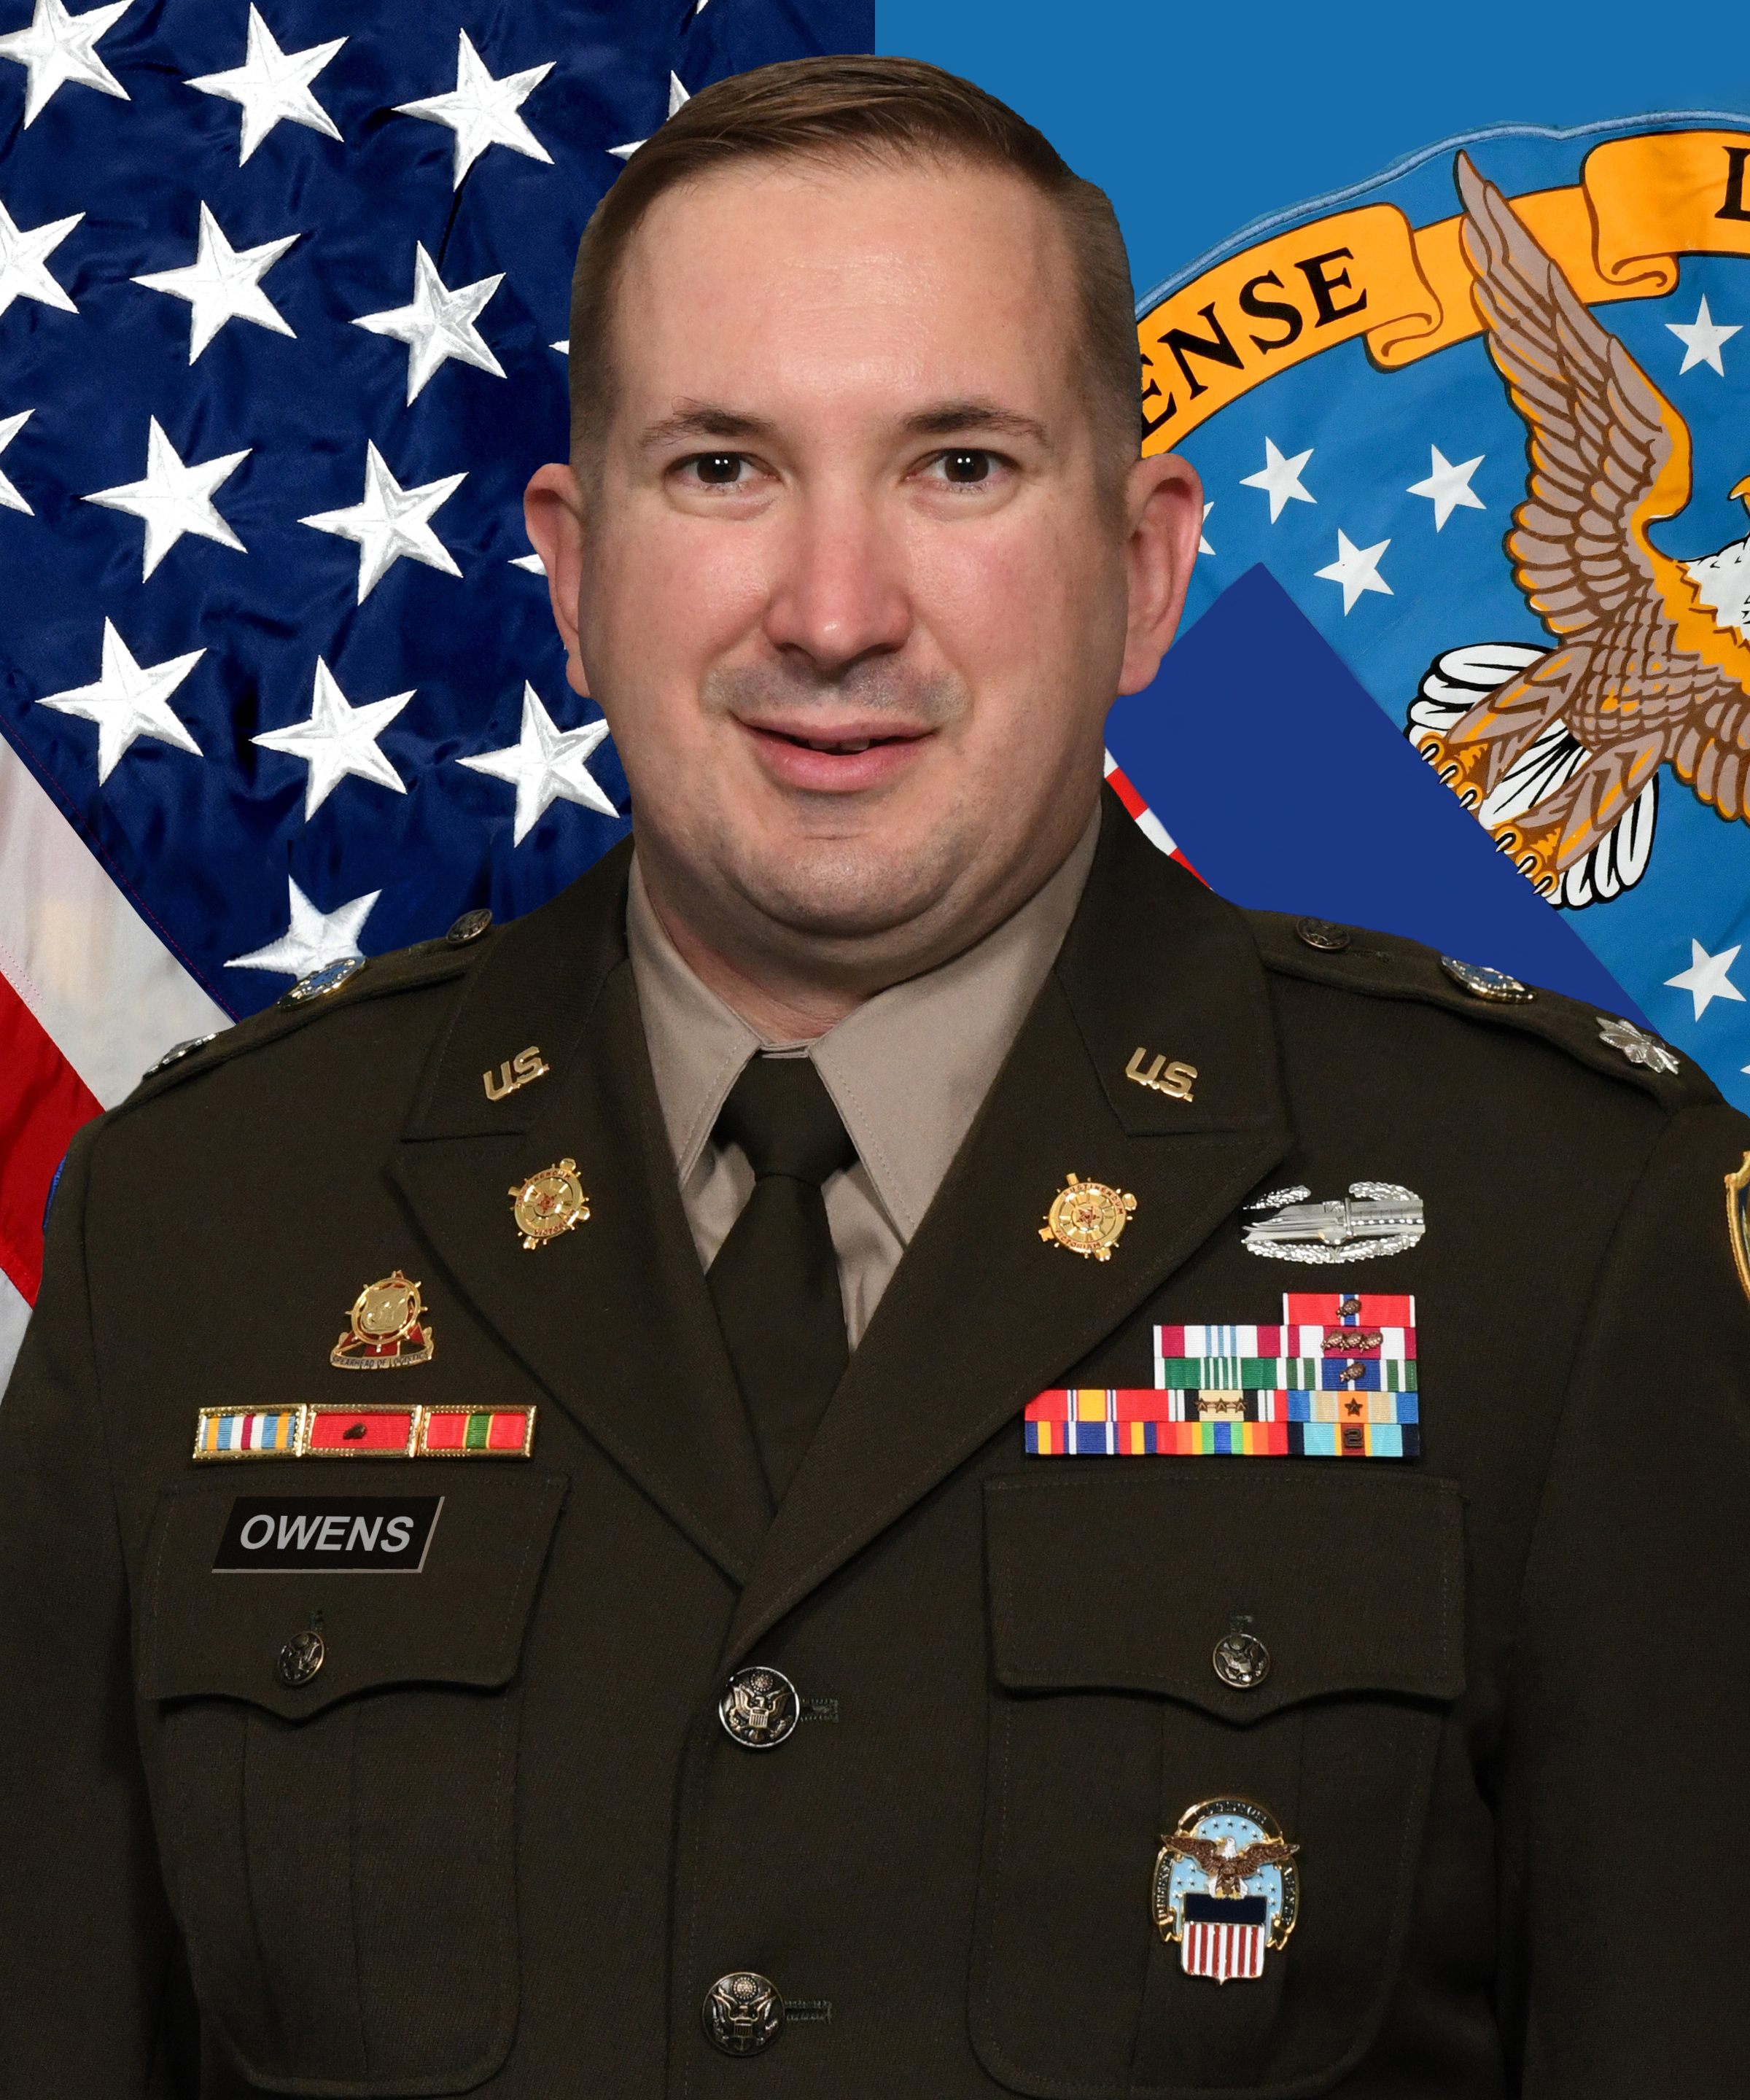 Timothy J. Owens, LTC USA, Commander